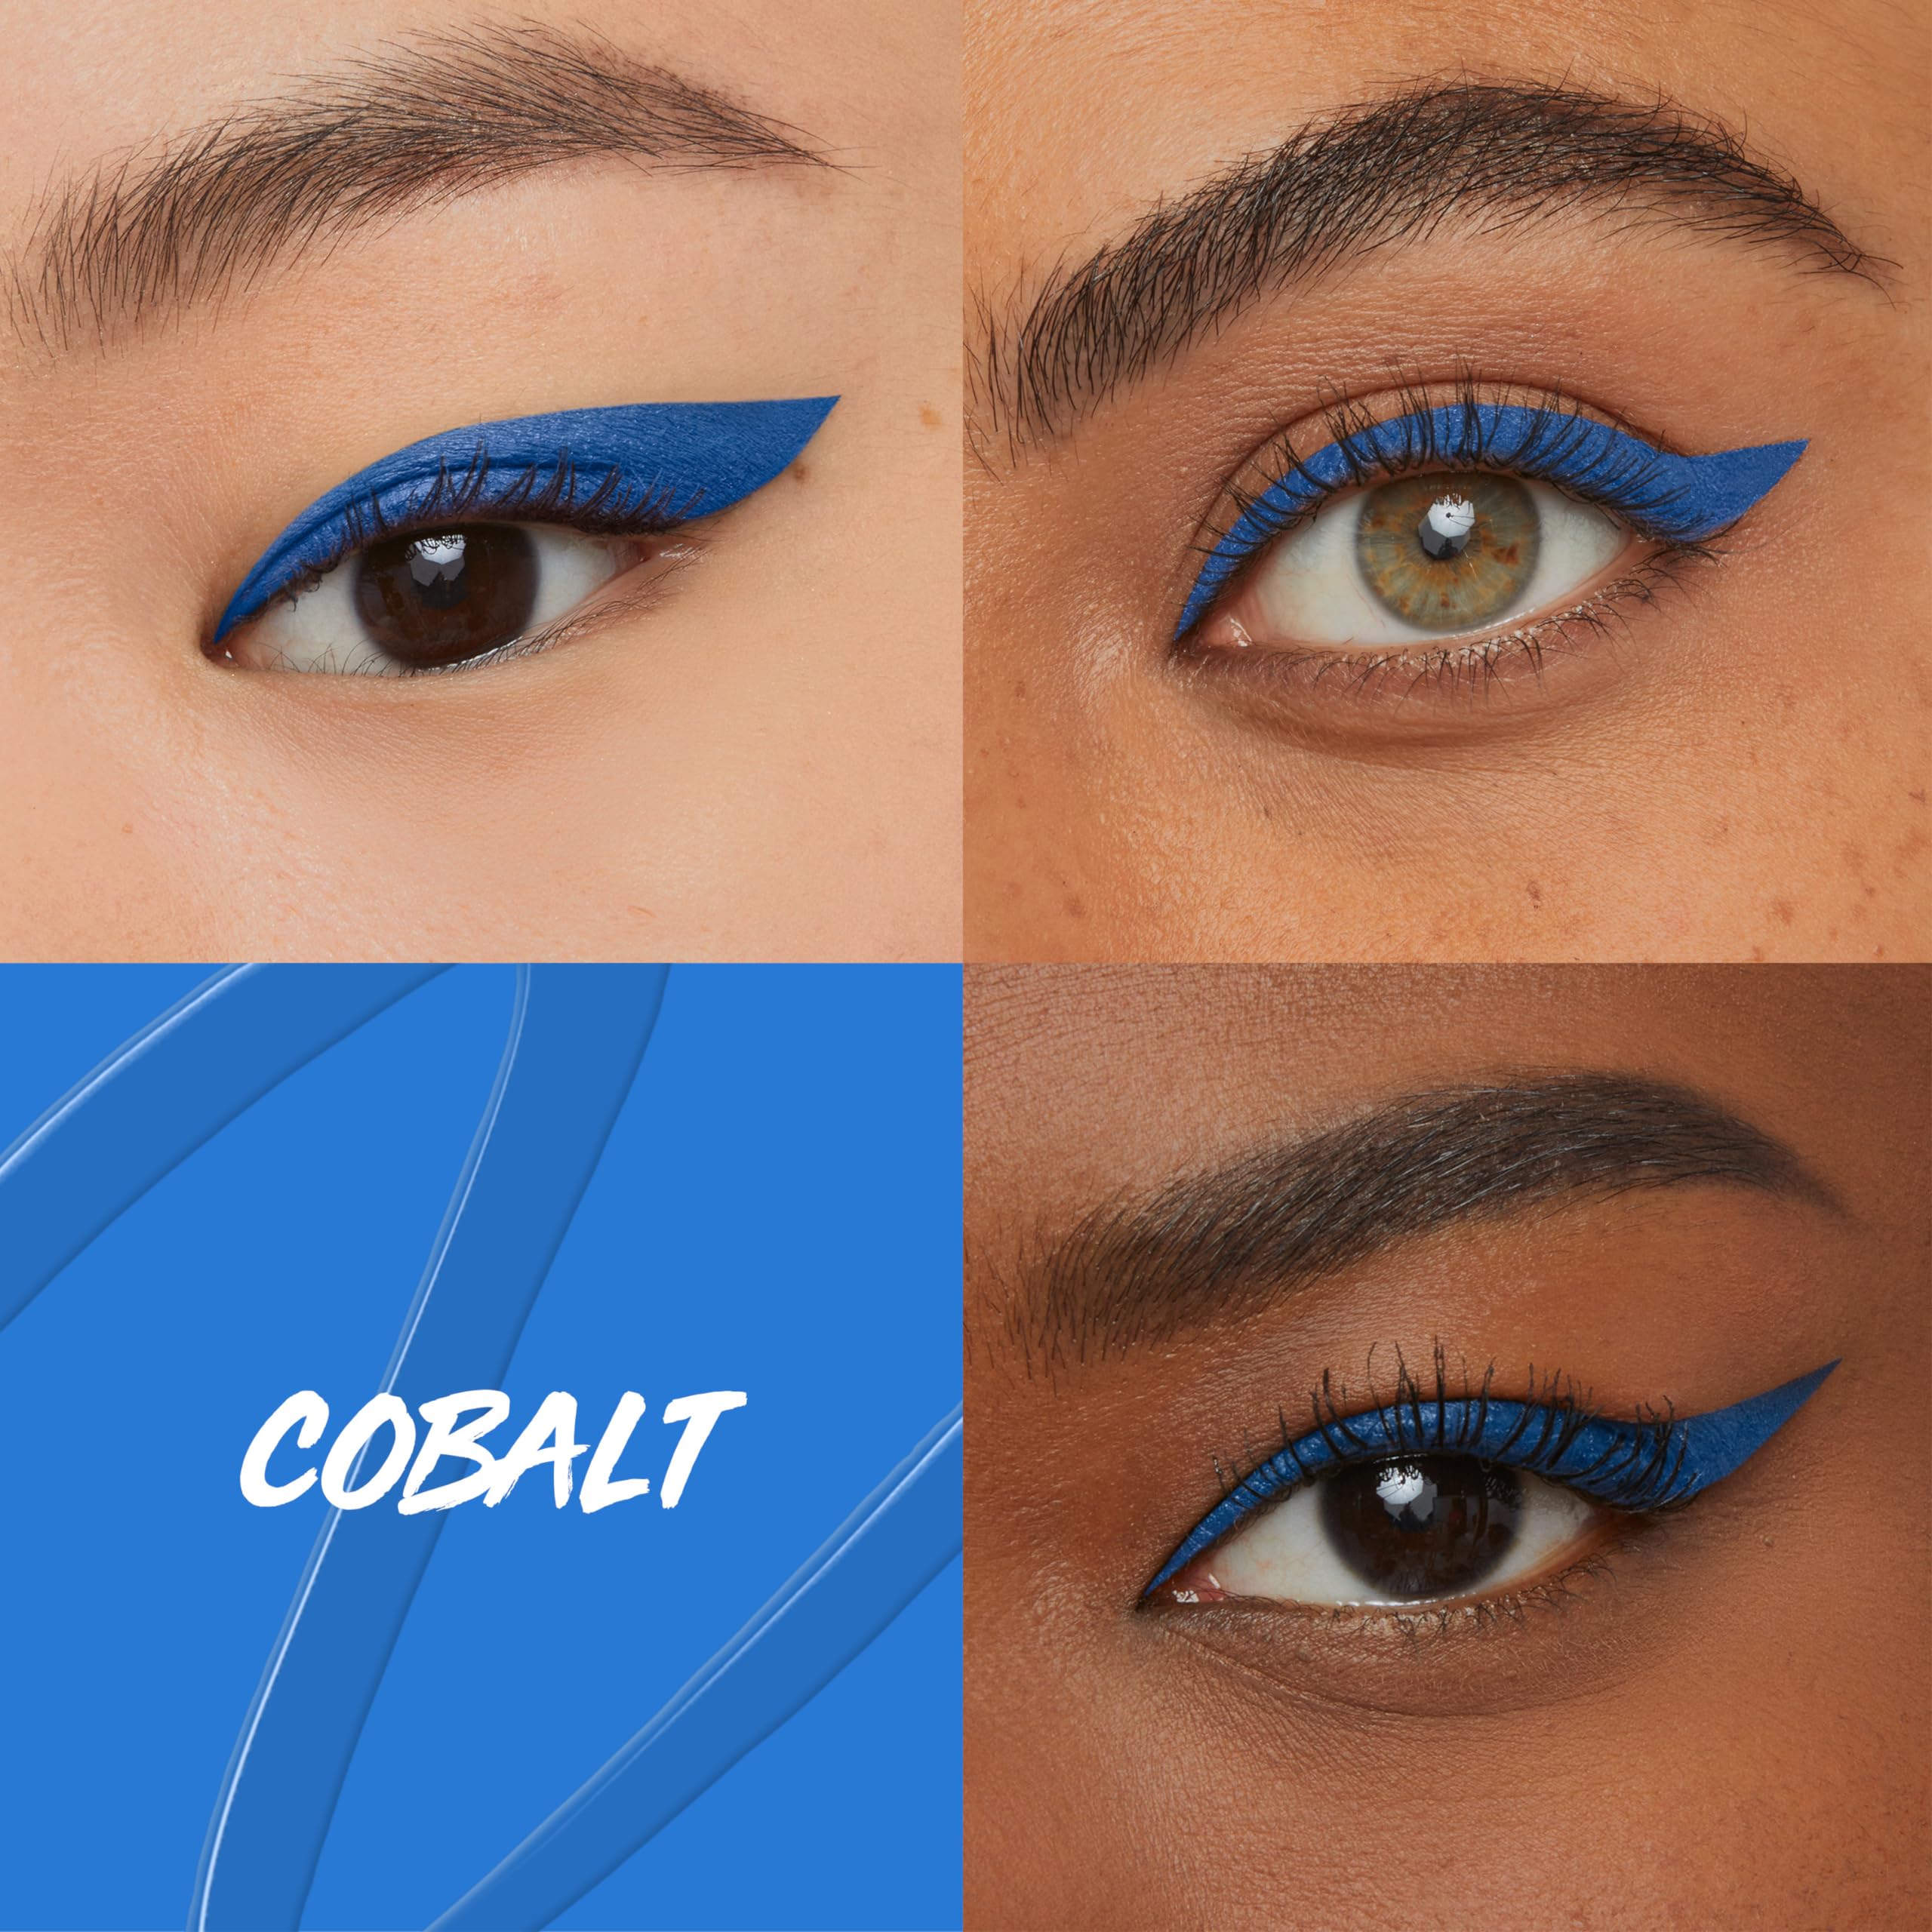 MAYBELLINE Master Precise All Day Liquid Eyeliner, Waterproof Eyeliner Makeup for up to 30HR Wear, Cobalt Blue, 1 Count